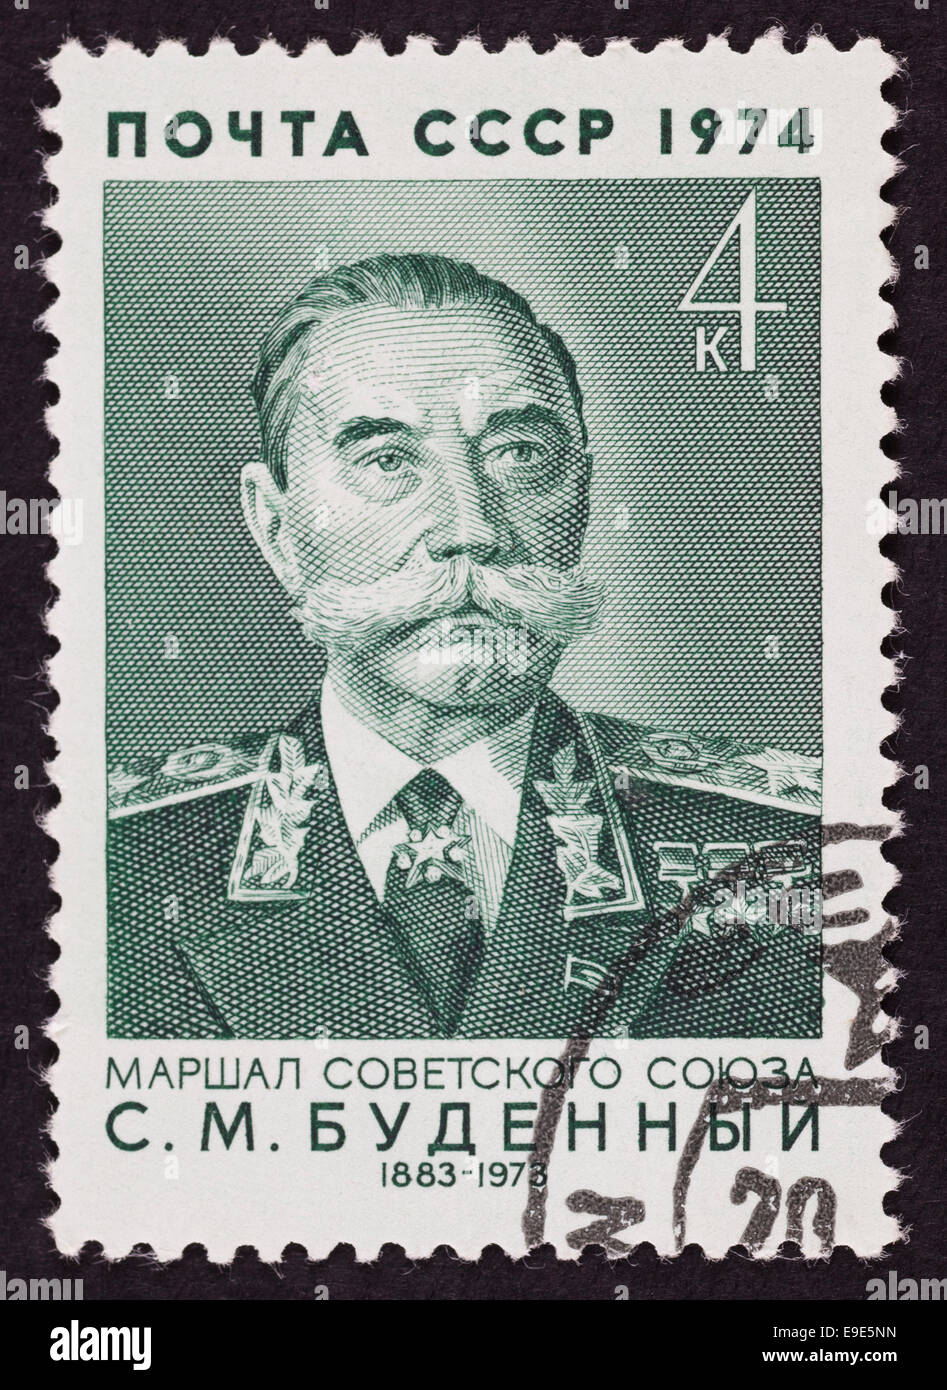 USSR postage stamp Semyon Budyonny. 1974 year. Black background. Stock Photo